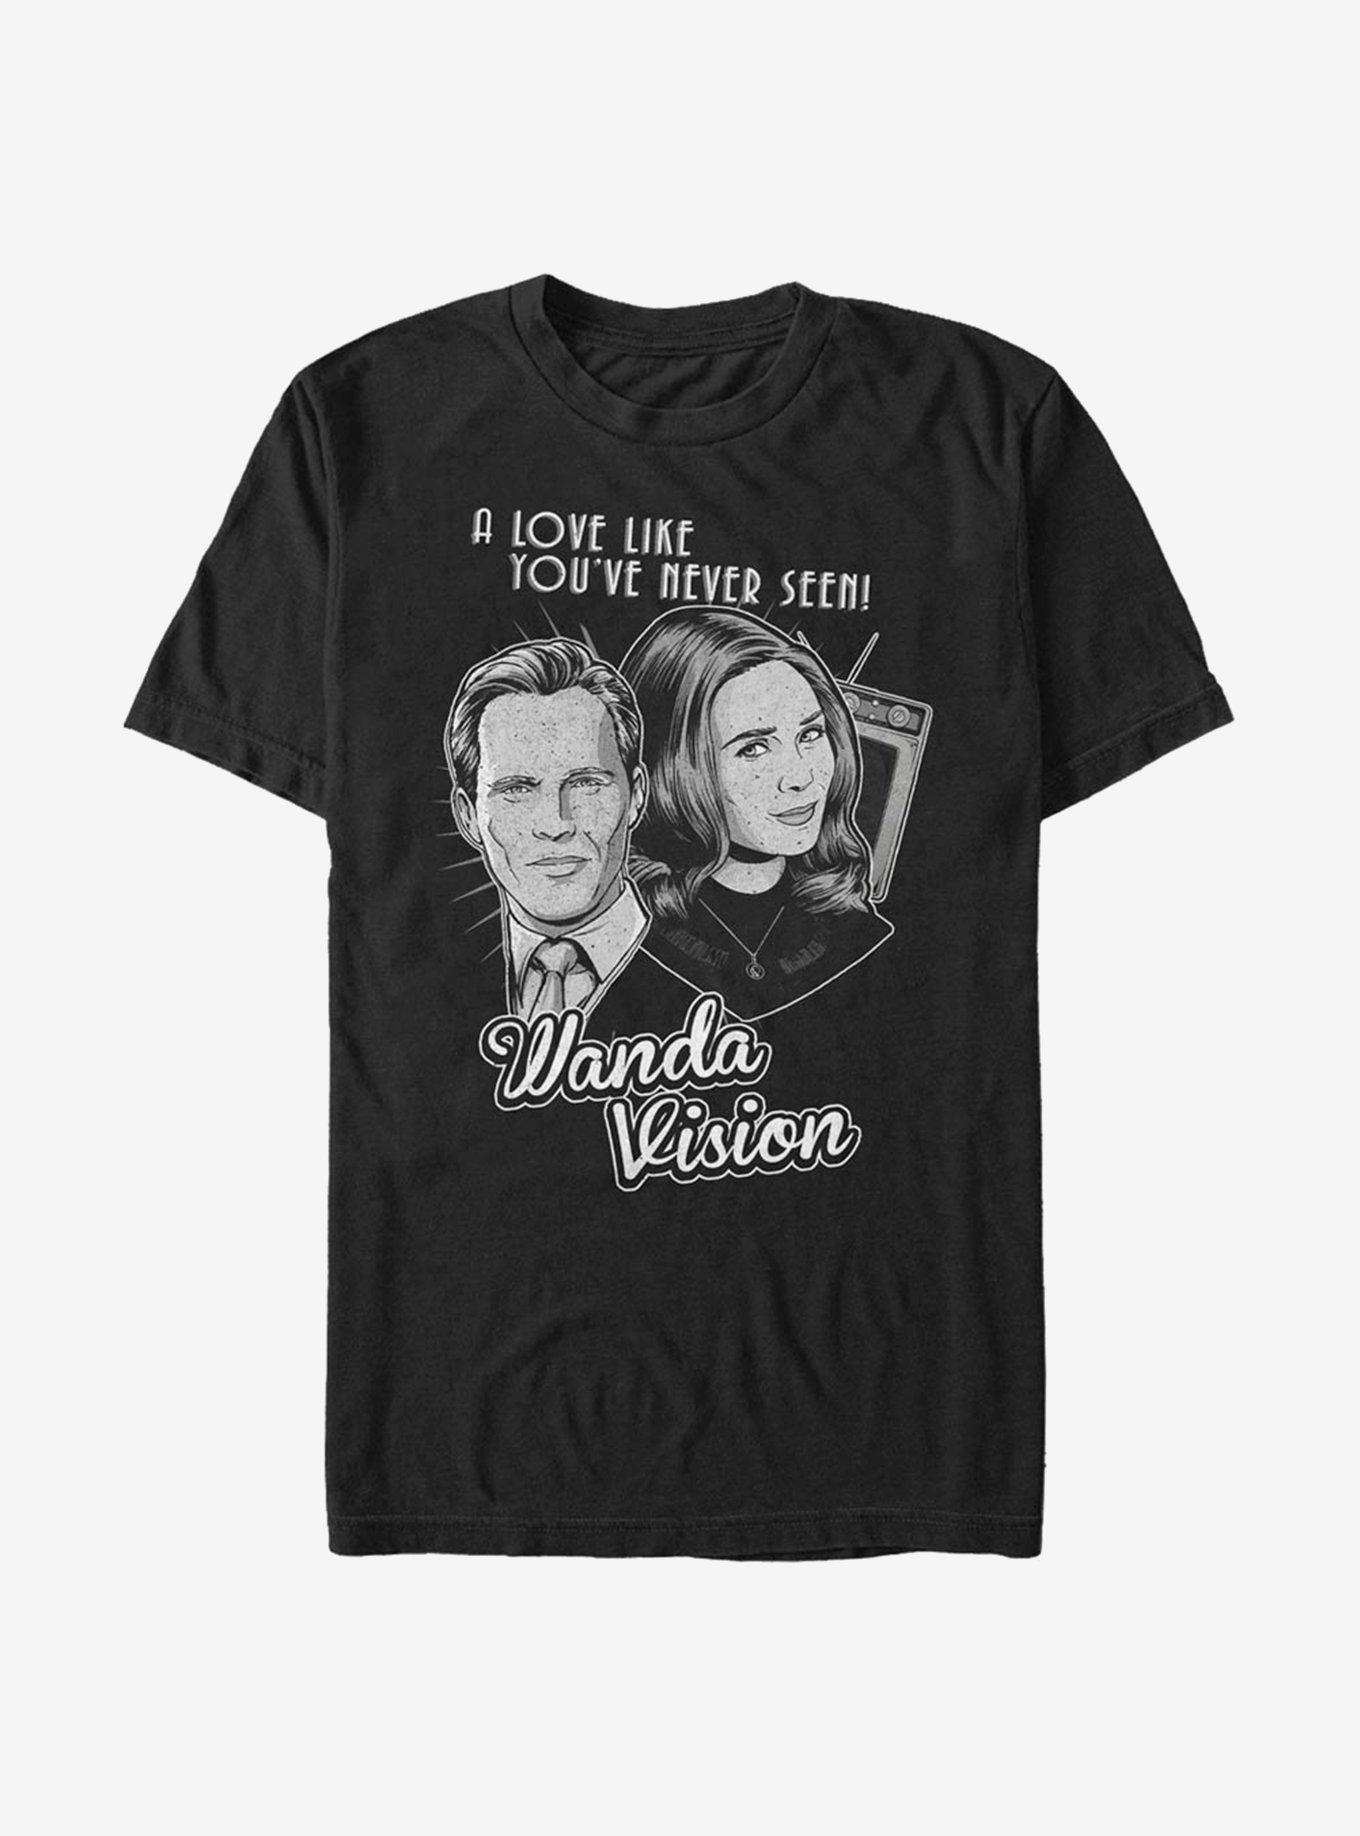 Marvel WandaVision Monochrome Wanda T-Shirt, BLACK, hi-res